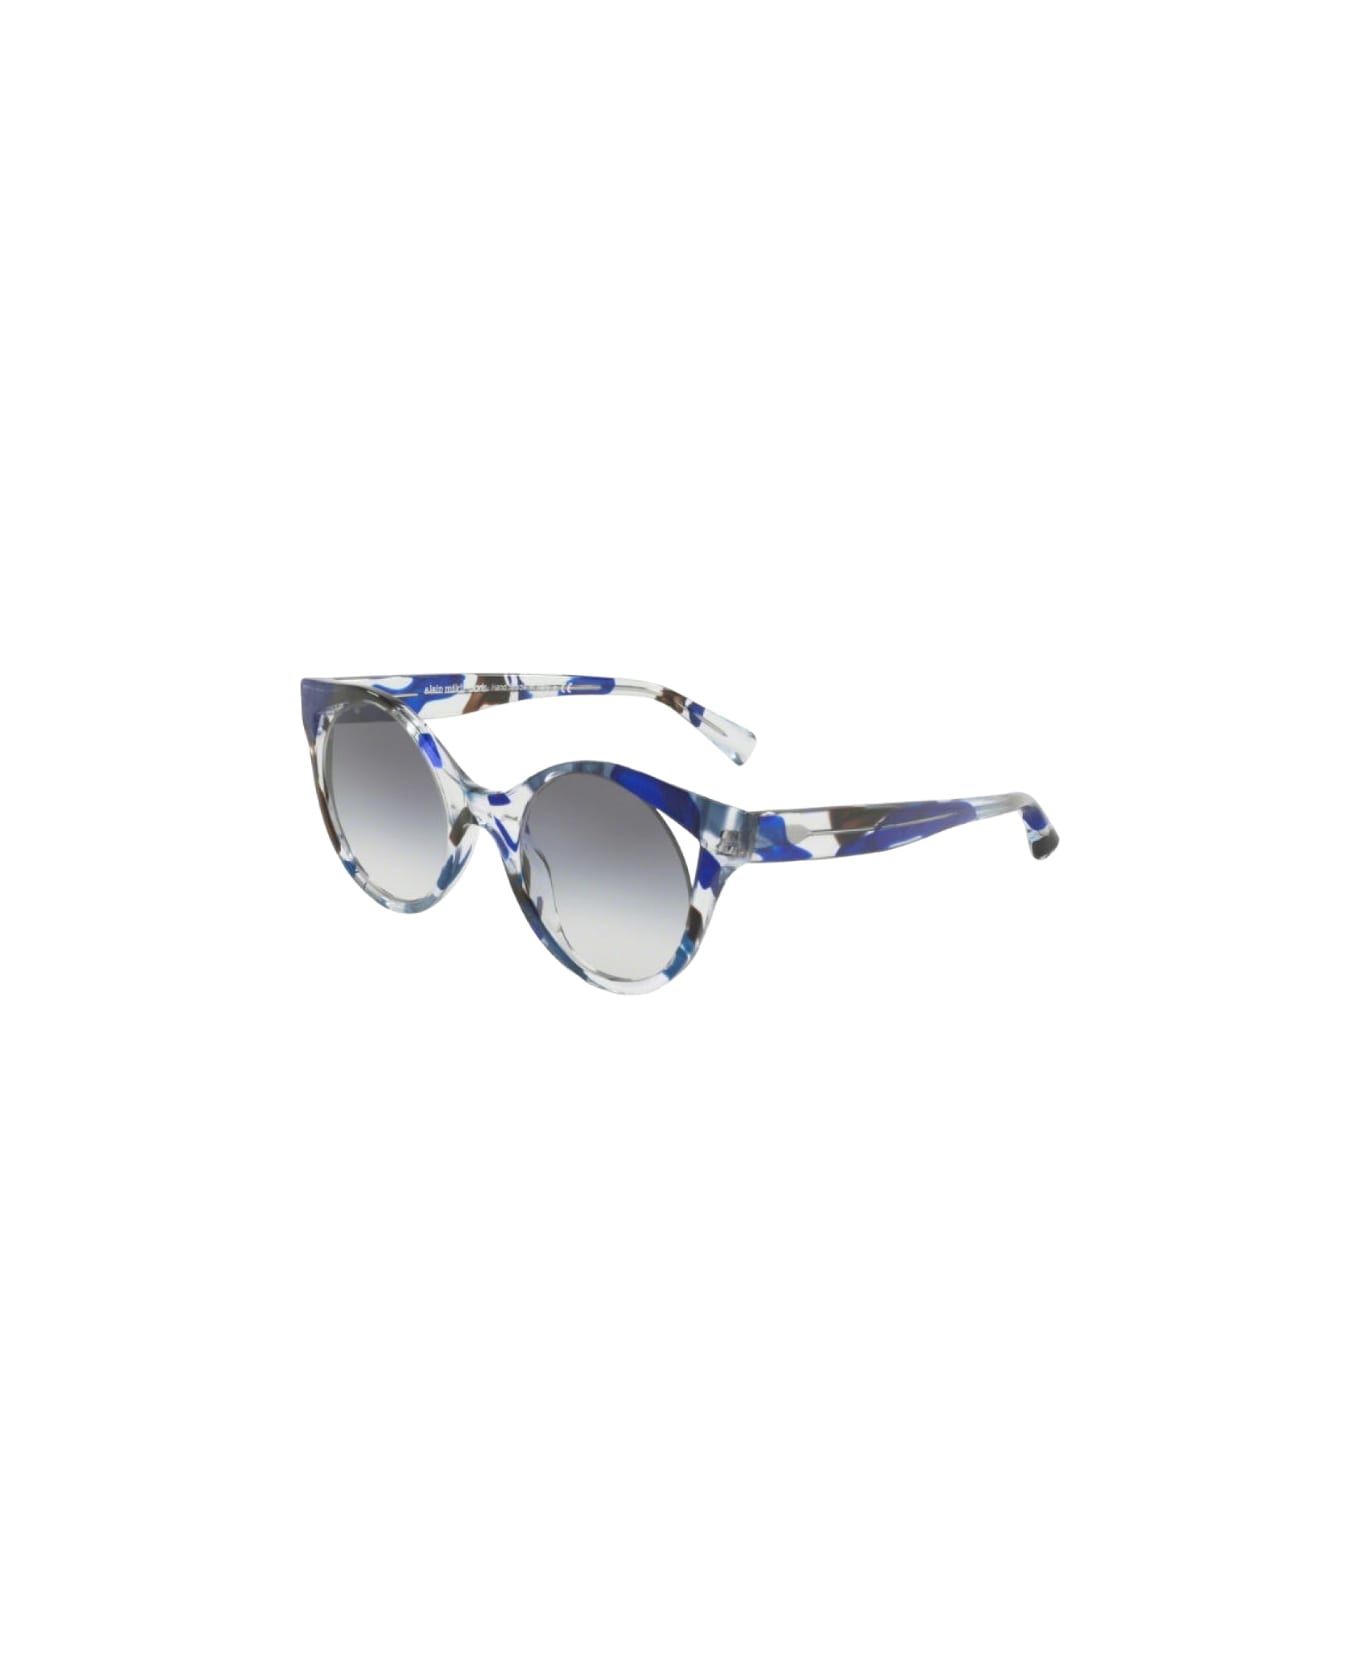 Alain Mikli Rayce - 5033 - Black / Blu Sunglasses